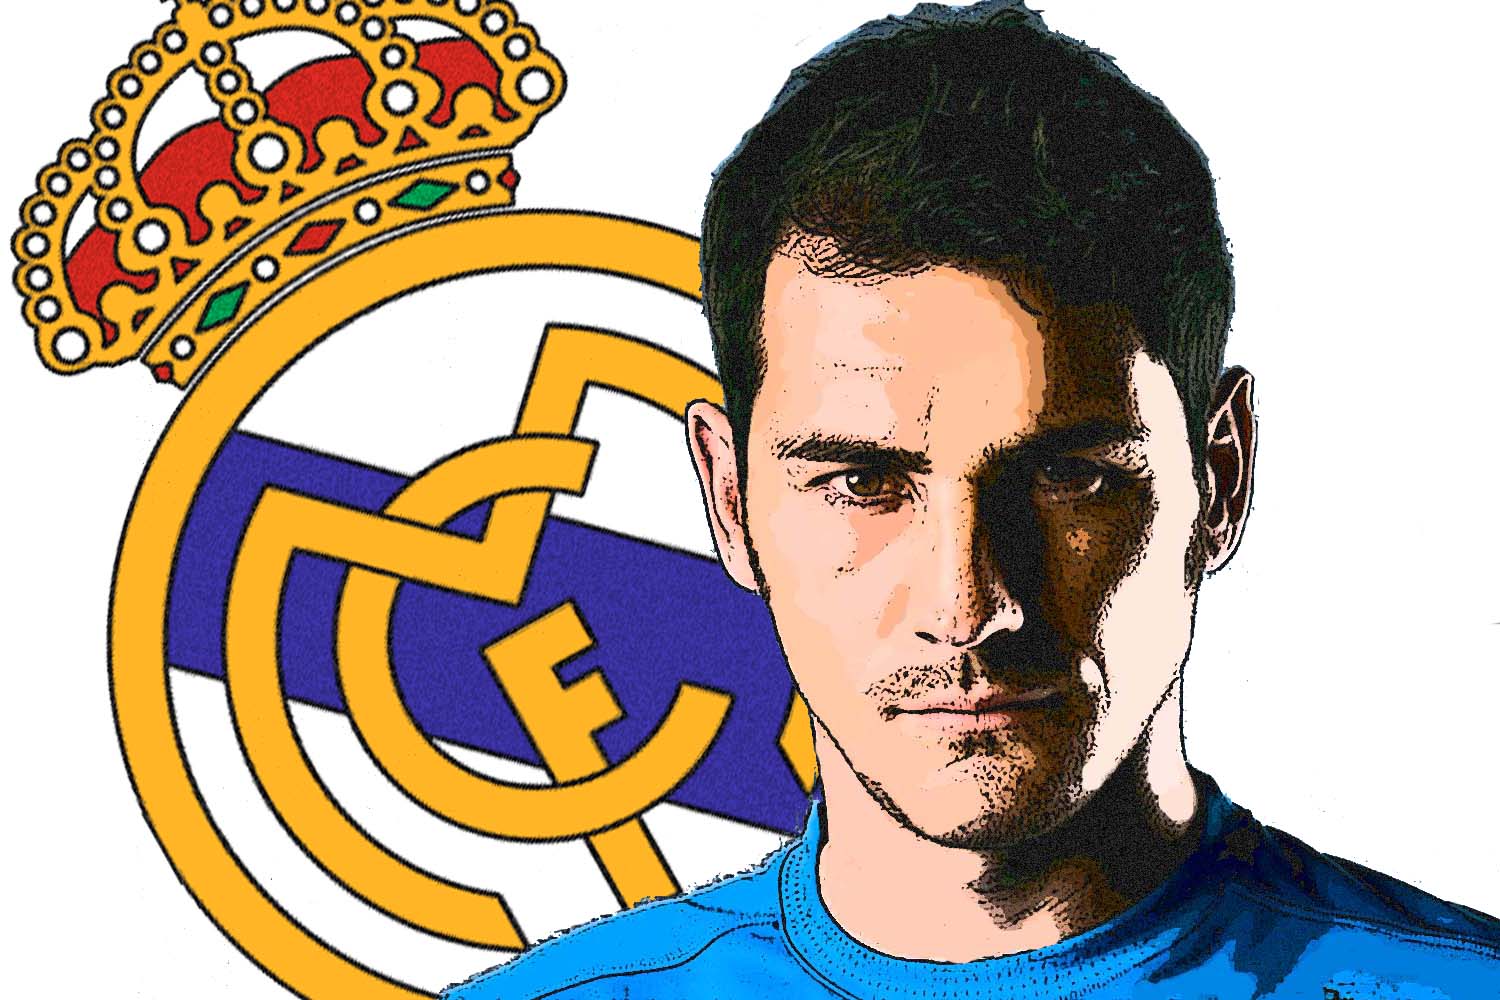 Download Wallpaper Iker Casillas Dikirim Oleh Rudy W Talla Bolanet